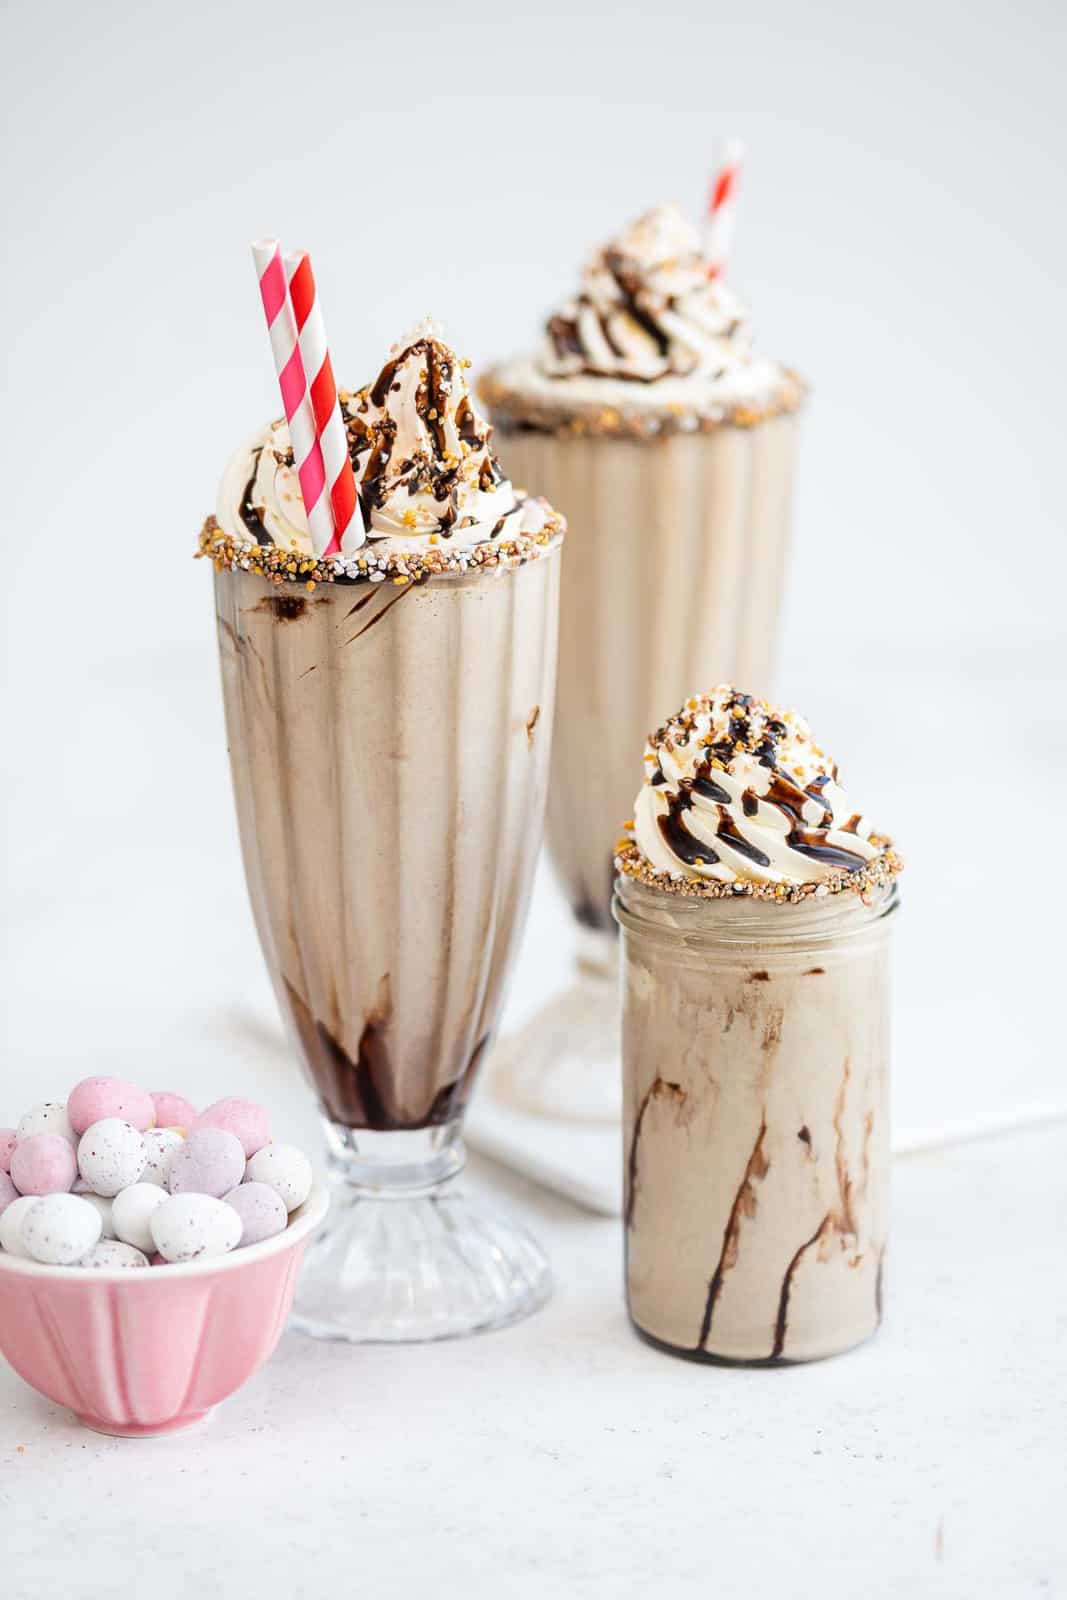 Tree vanilla milkshakes garnished with whipped cream, sprinkles and chocolate sauce